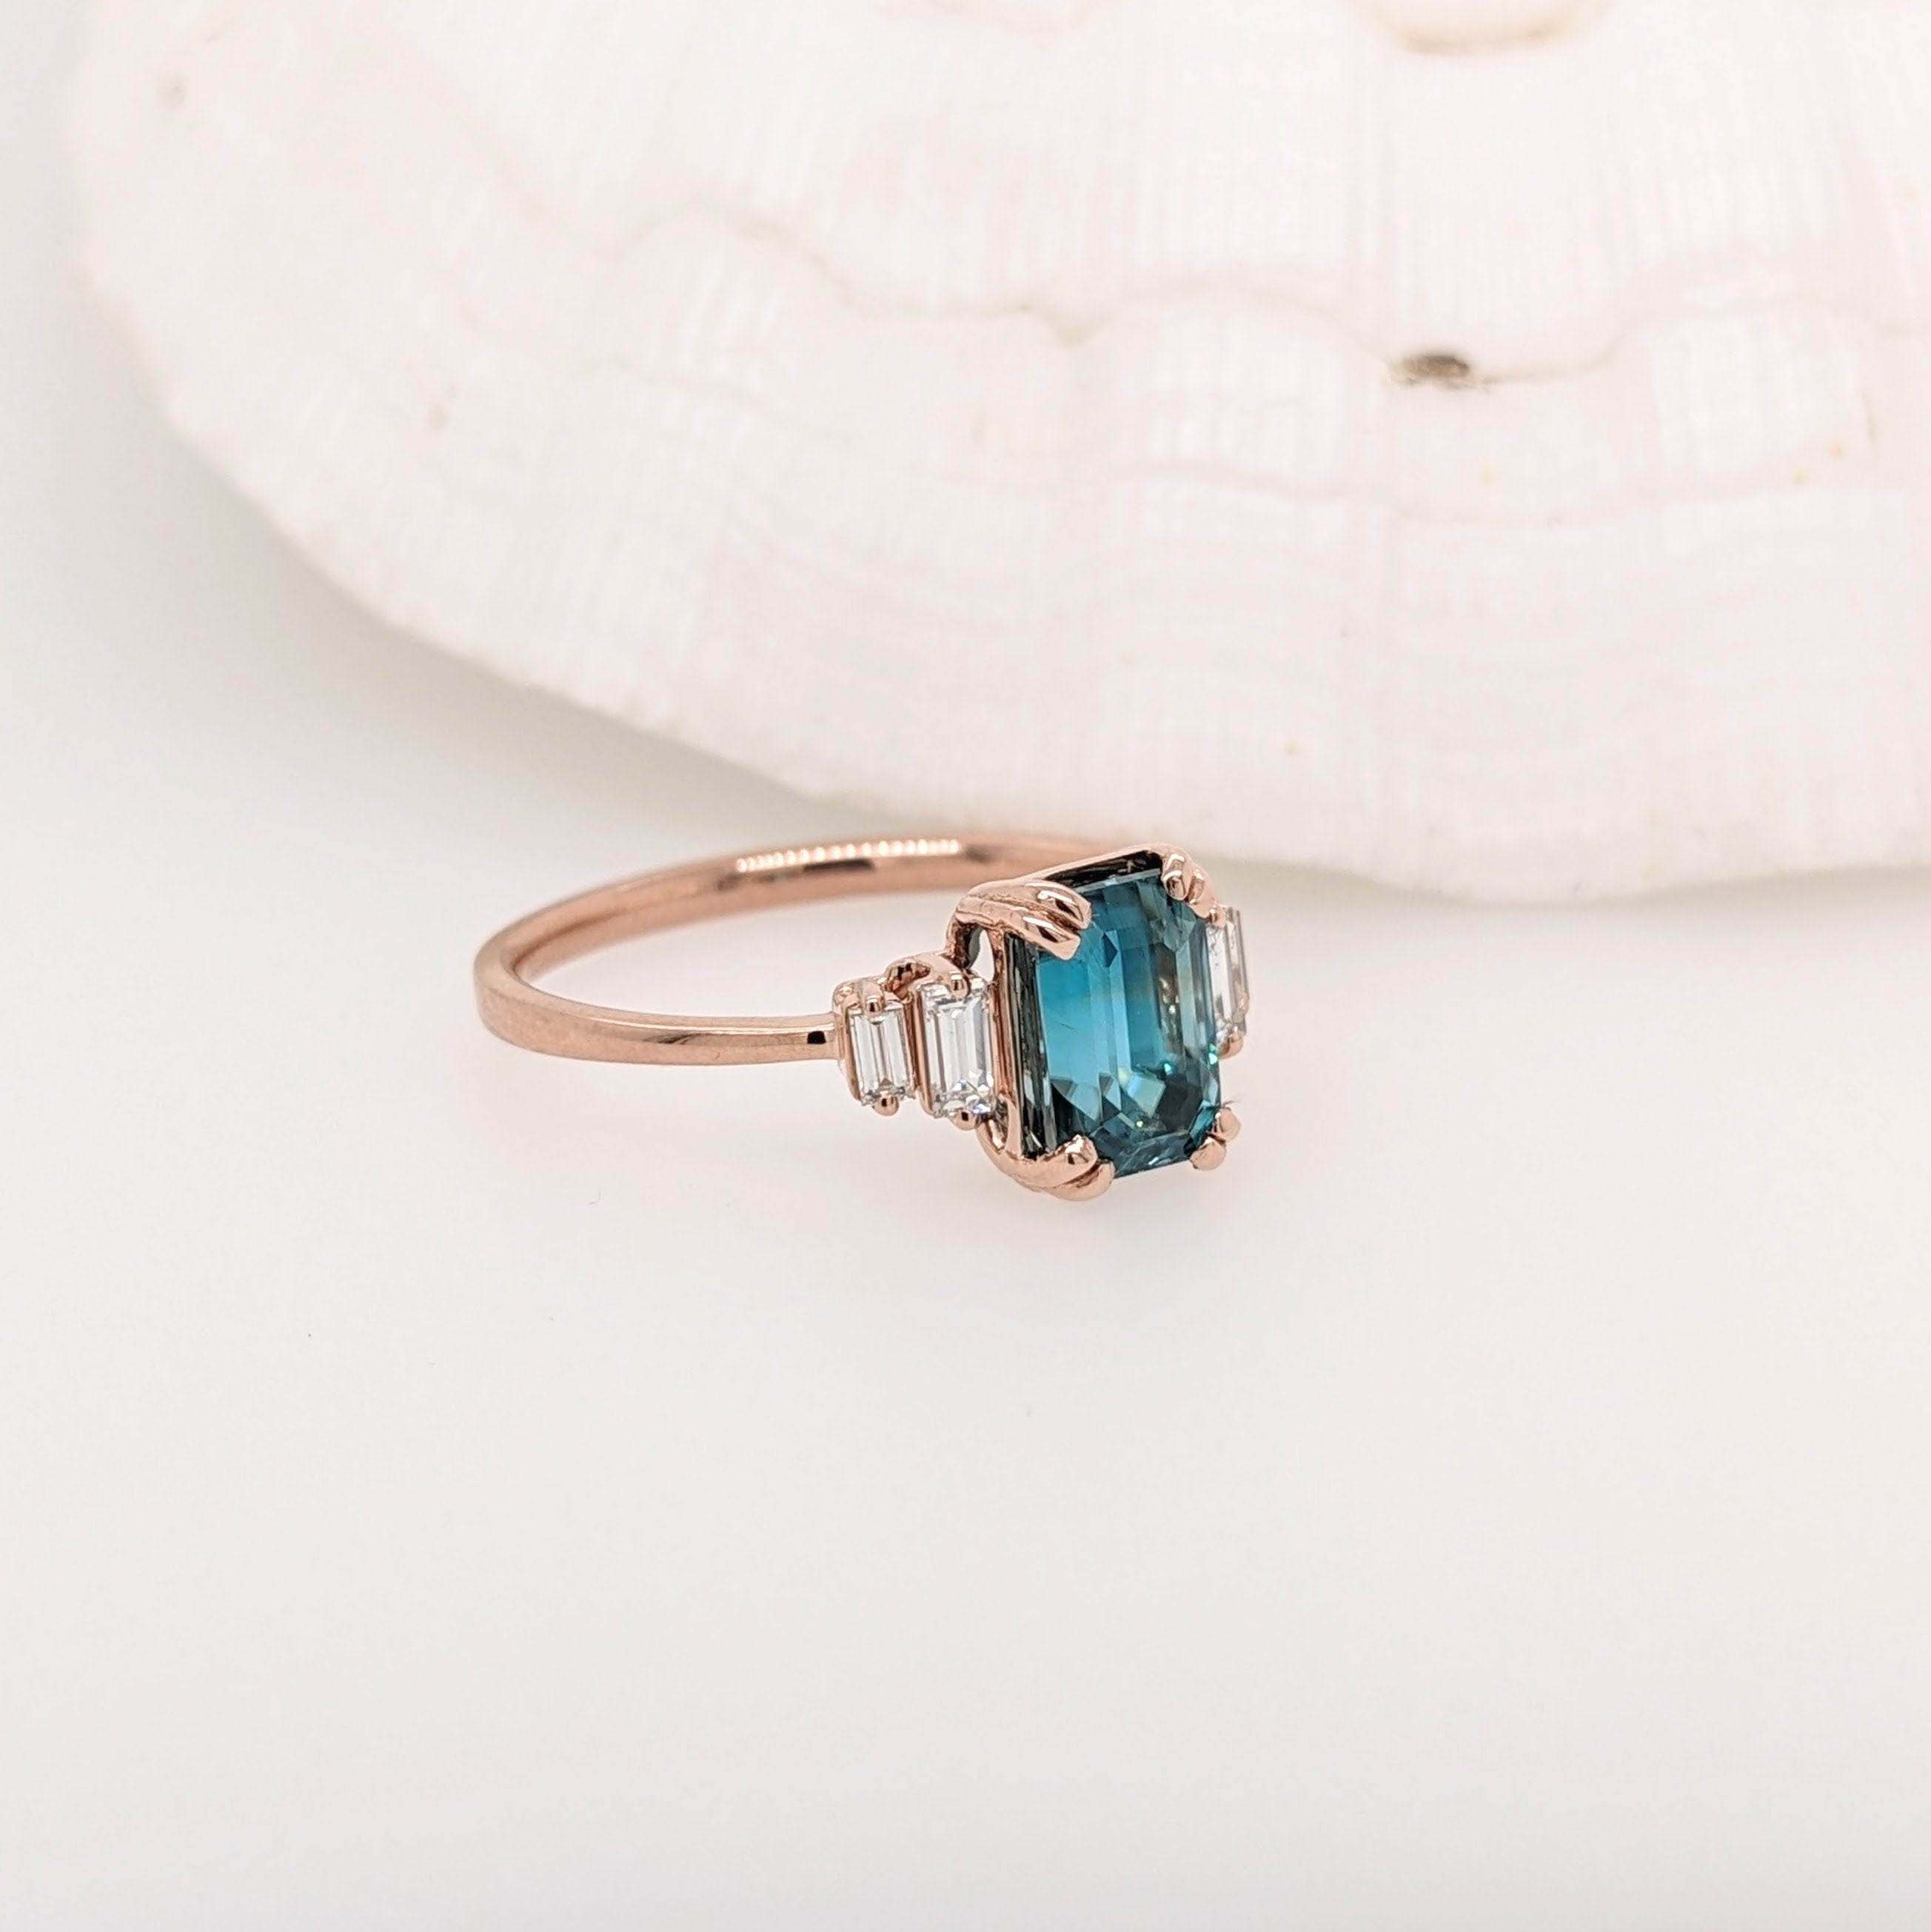 Vibrant Blue Zircon Ring in 14K Rose Gold w Natural Diamond Accents | Emerald Cut 8.5x6mm | December Birthstone | Elegant Statement Ring